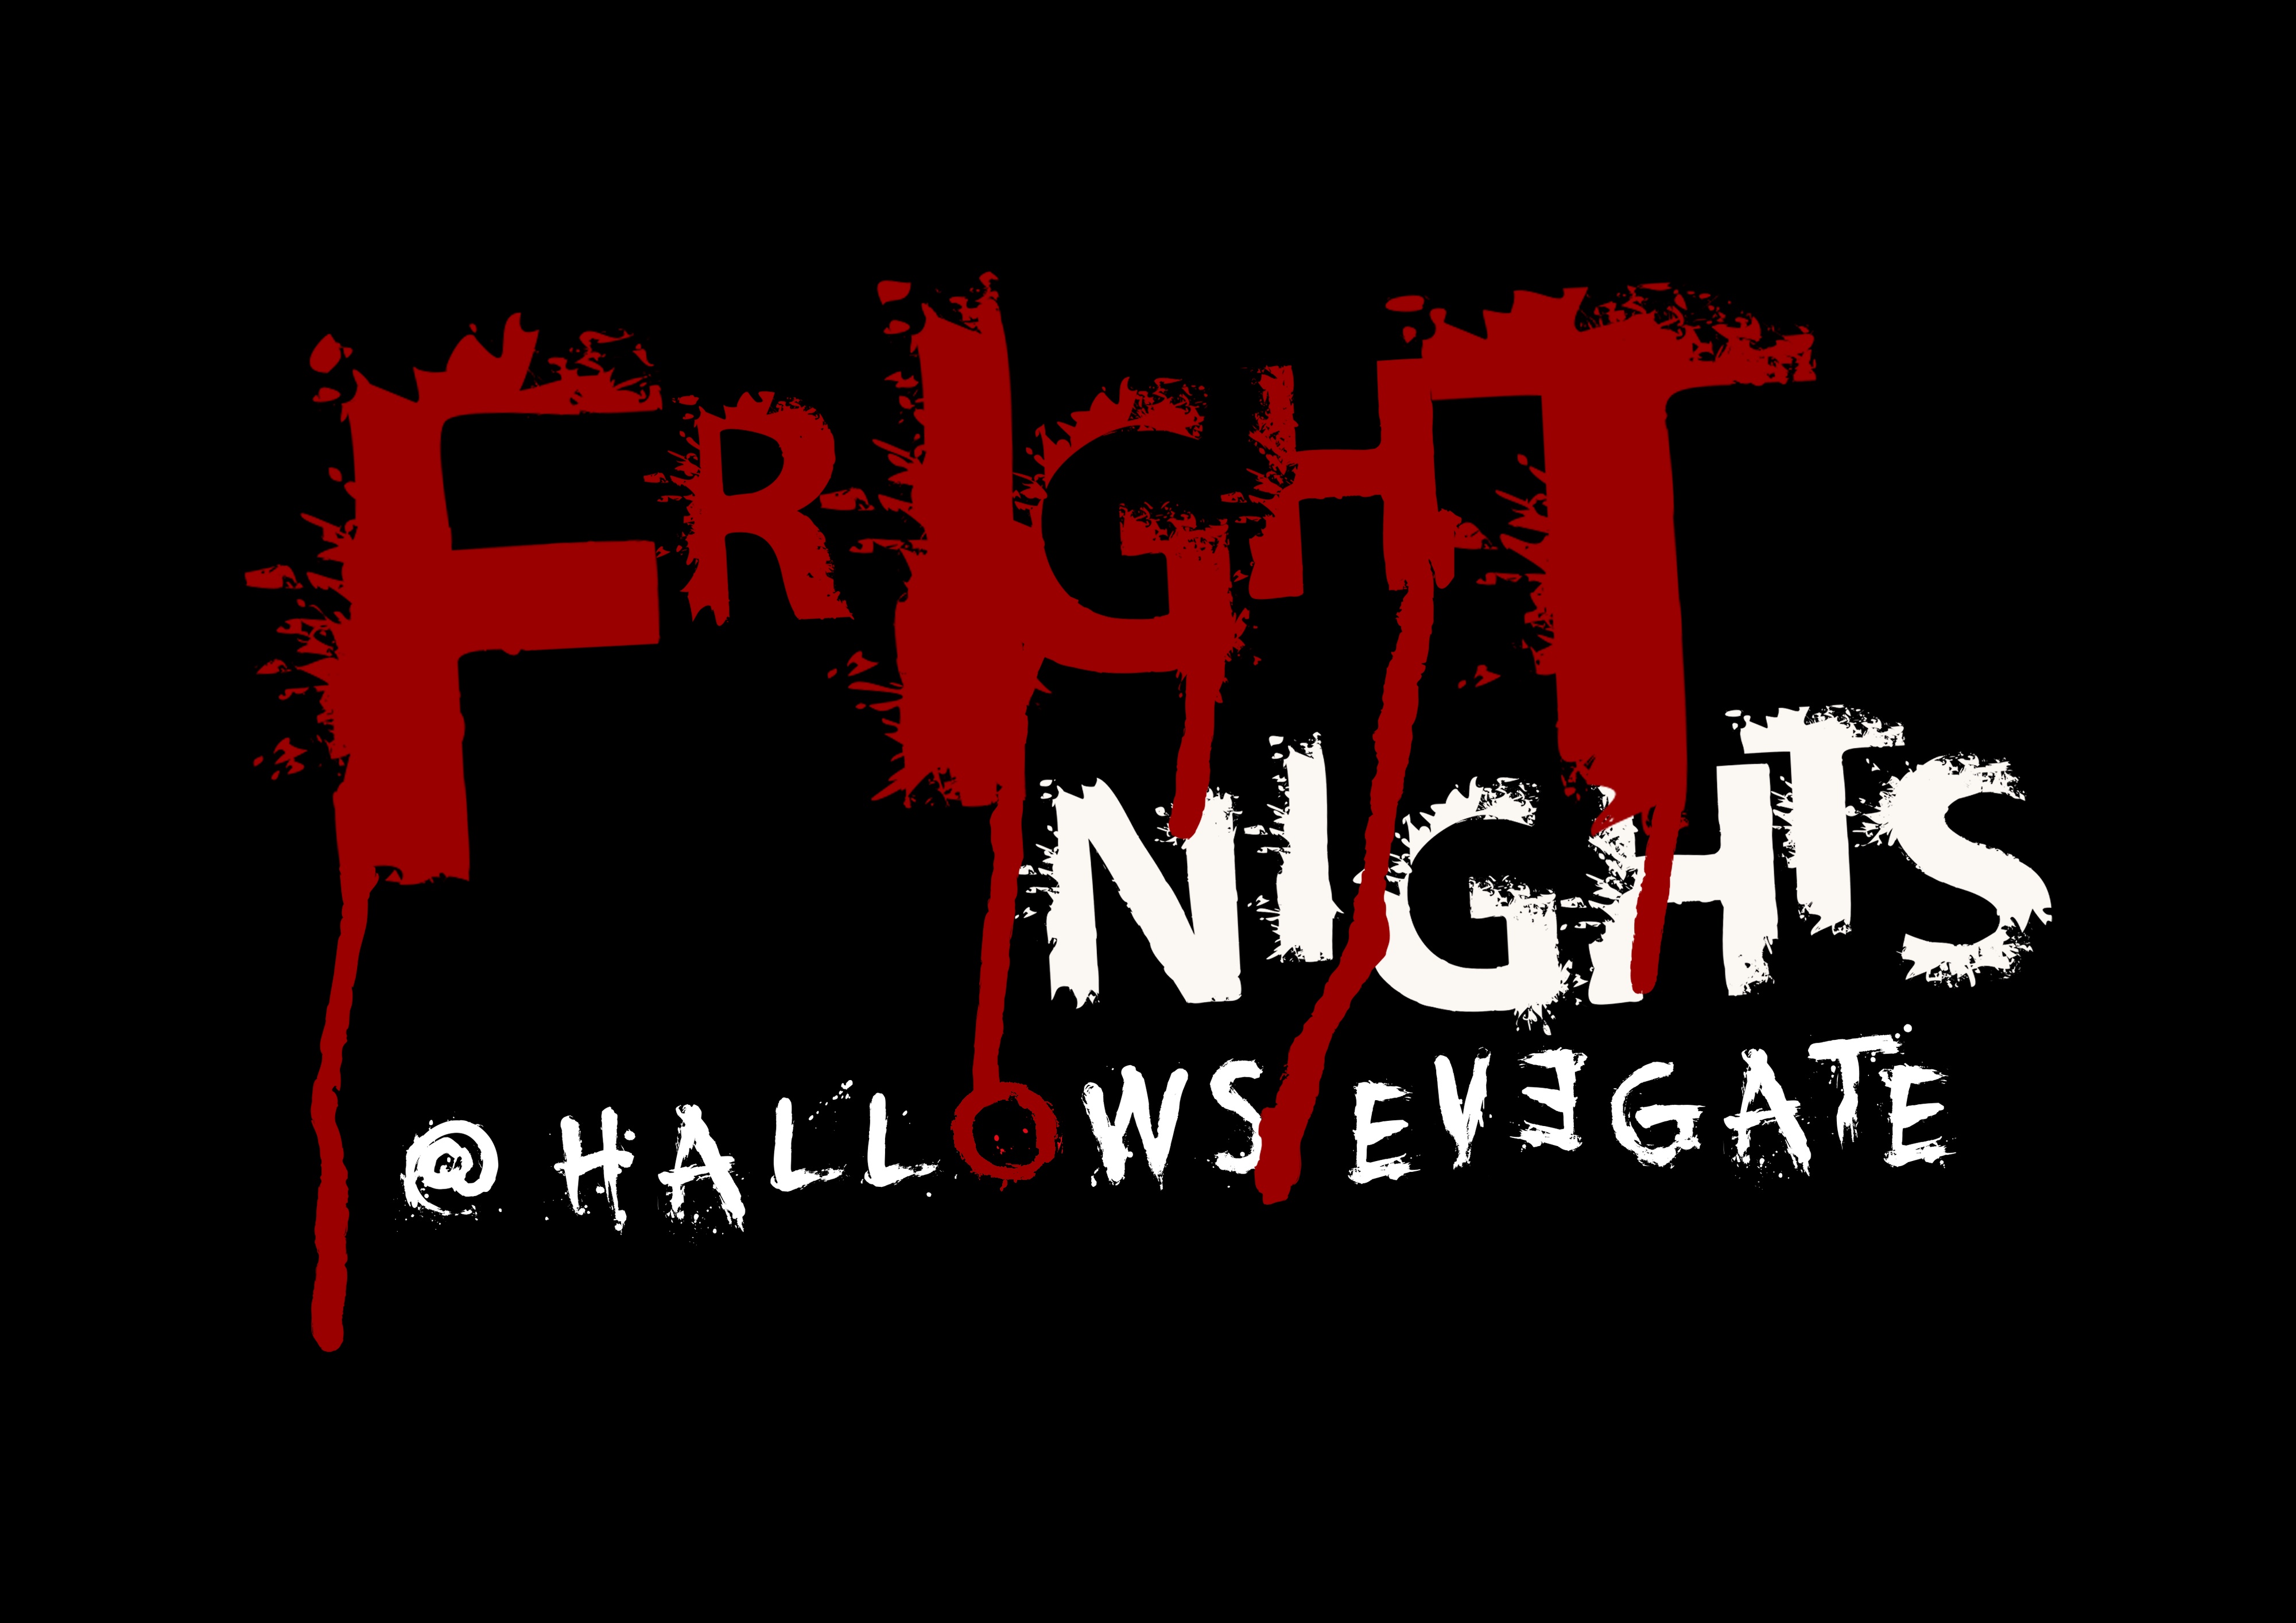 Fright Nights Hallows Evegate 1